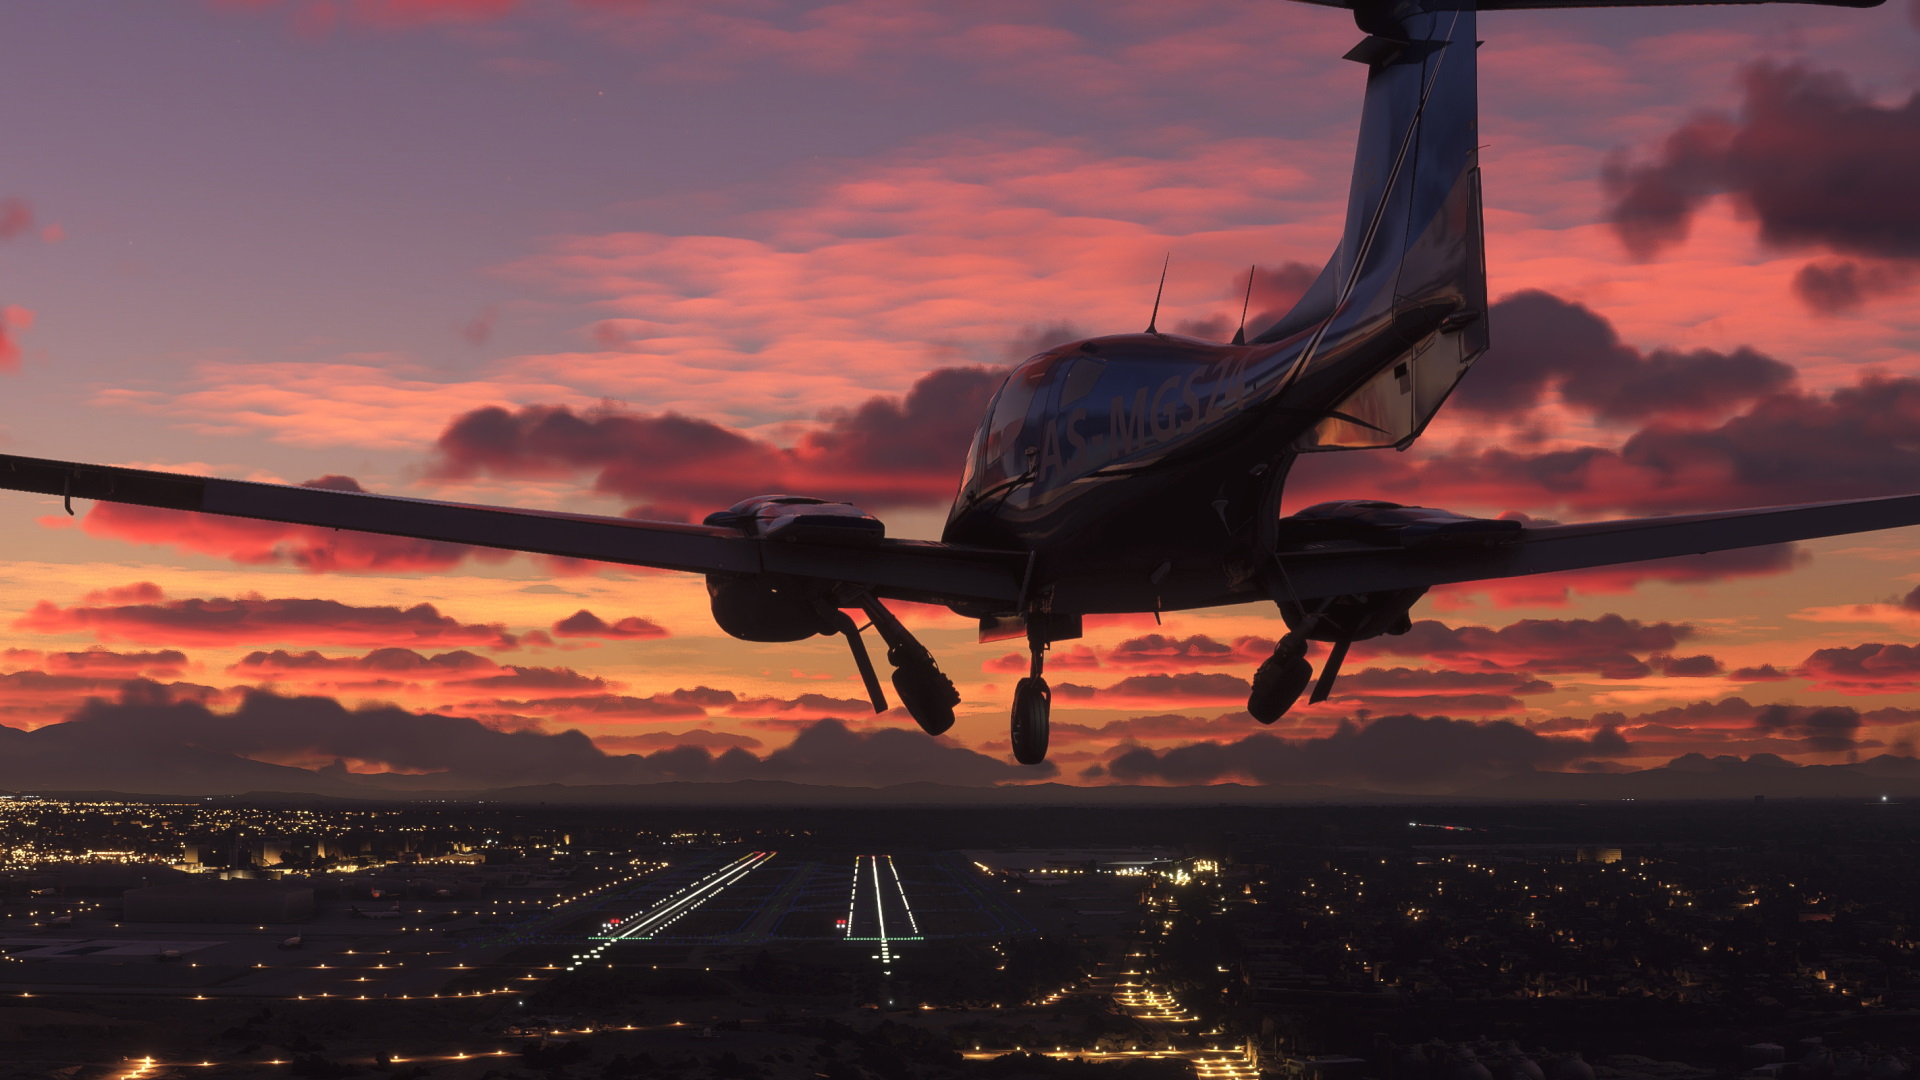 Landing at sunset in Microsoft Flight Simulator